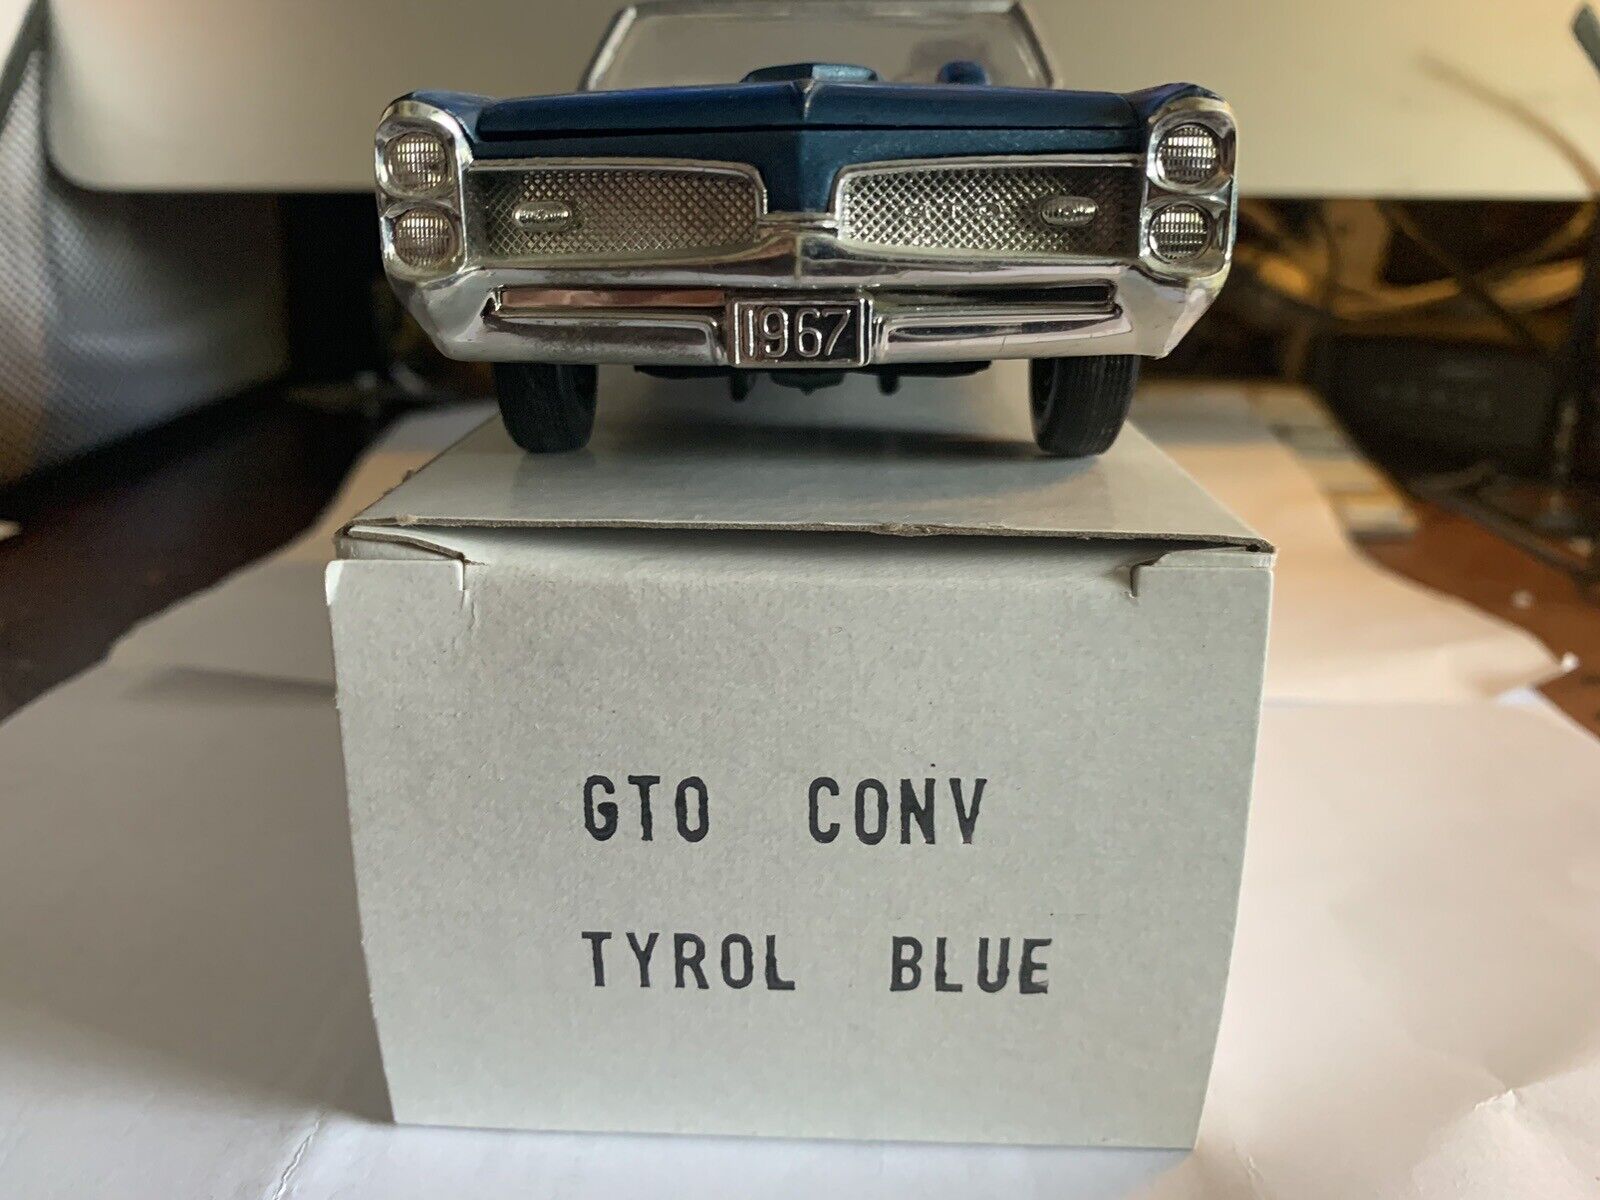 1967 Pontiac GTO Convertible Model Car With Box